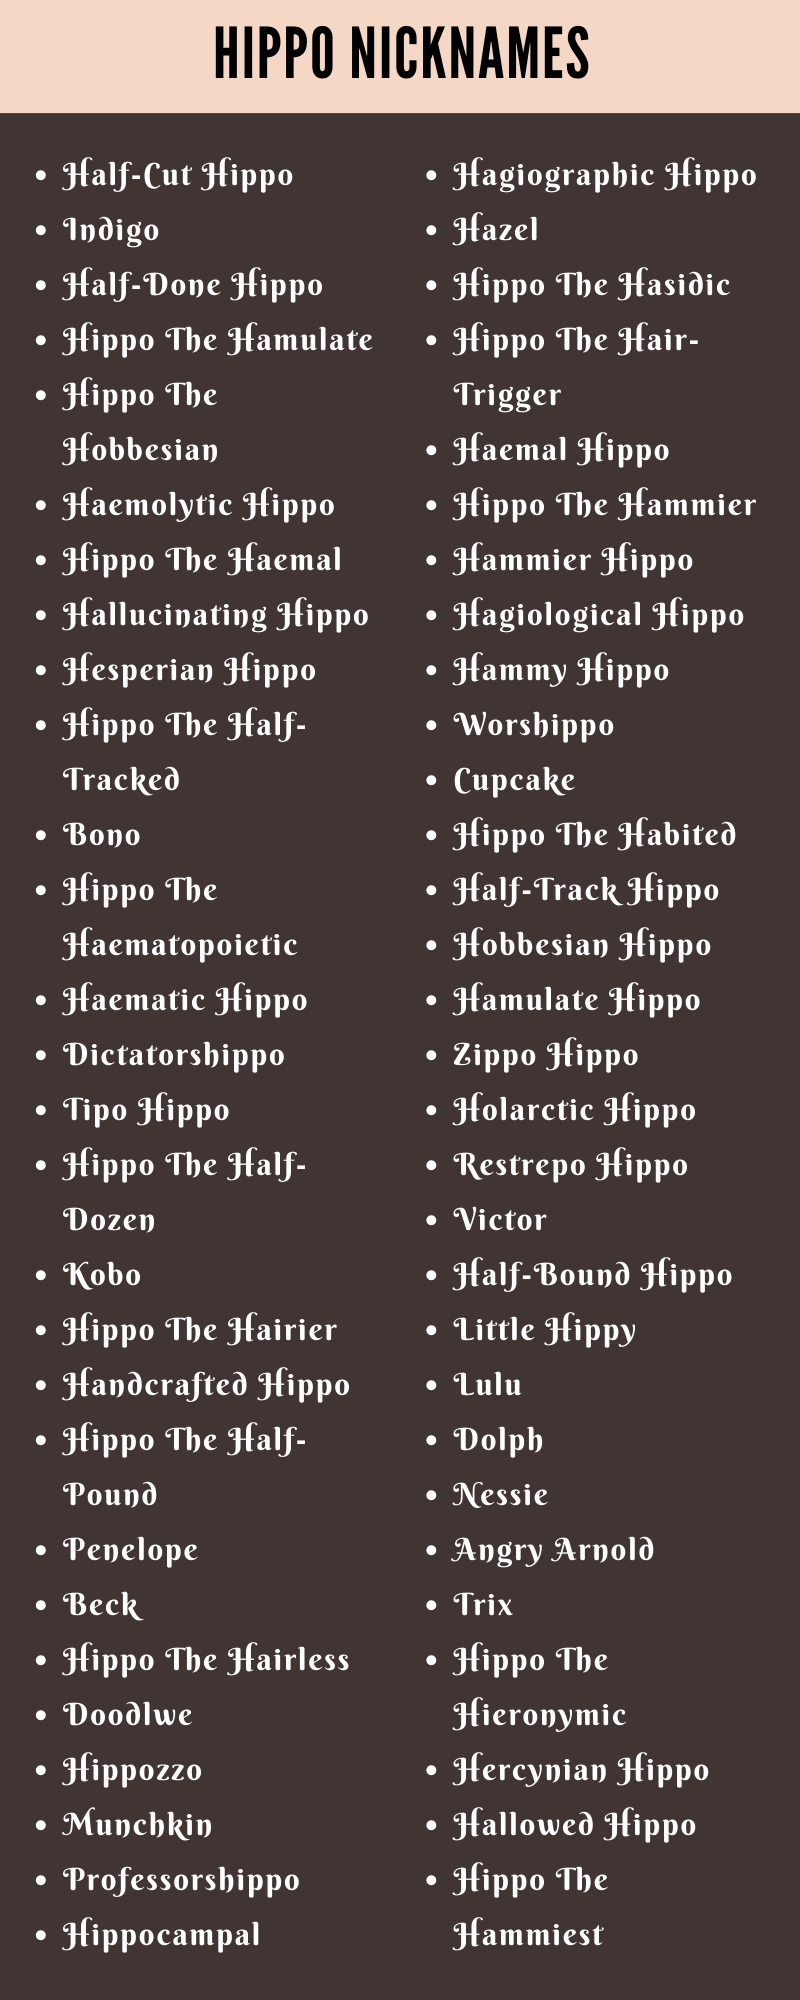 Hippo Nicknames